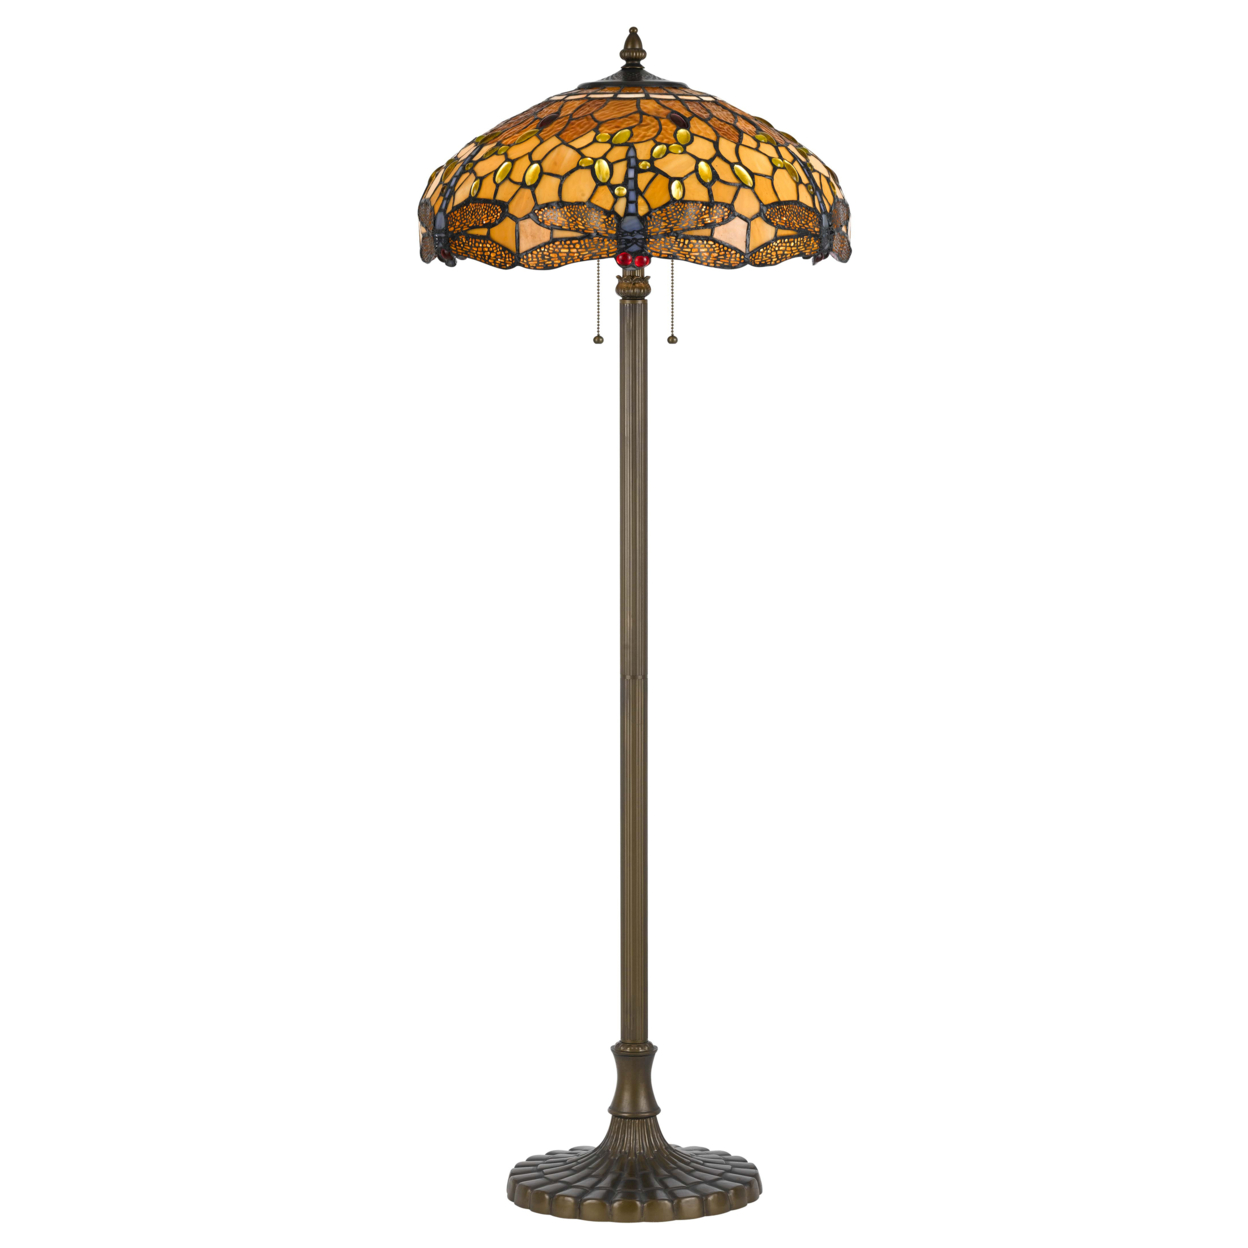 2 Bulb Tiffany Floor Lamp With Dragonfly Design Shade, Multicolor- Saltoro Sherpi